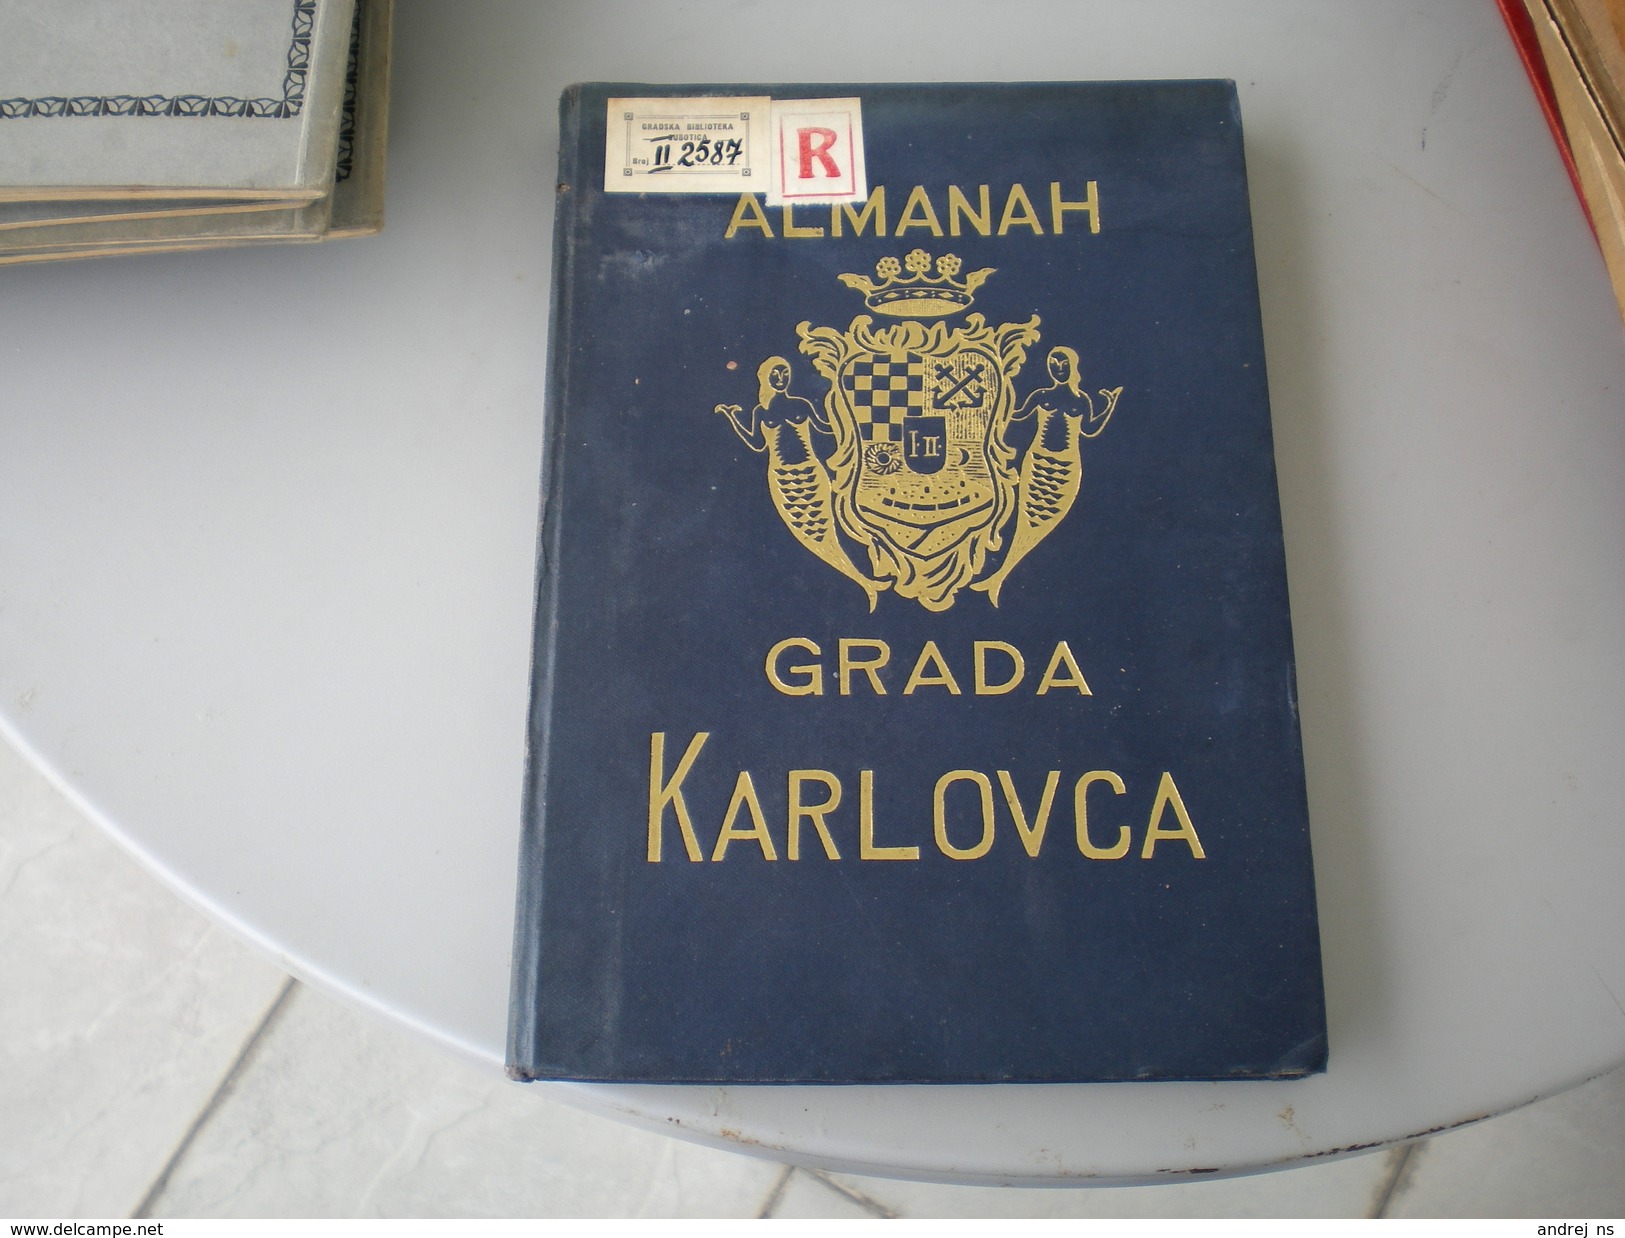 Almanah Grada Karlovca Marko Sablic 1933 Zagreb - Slav Languages